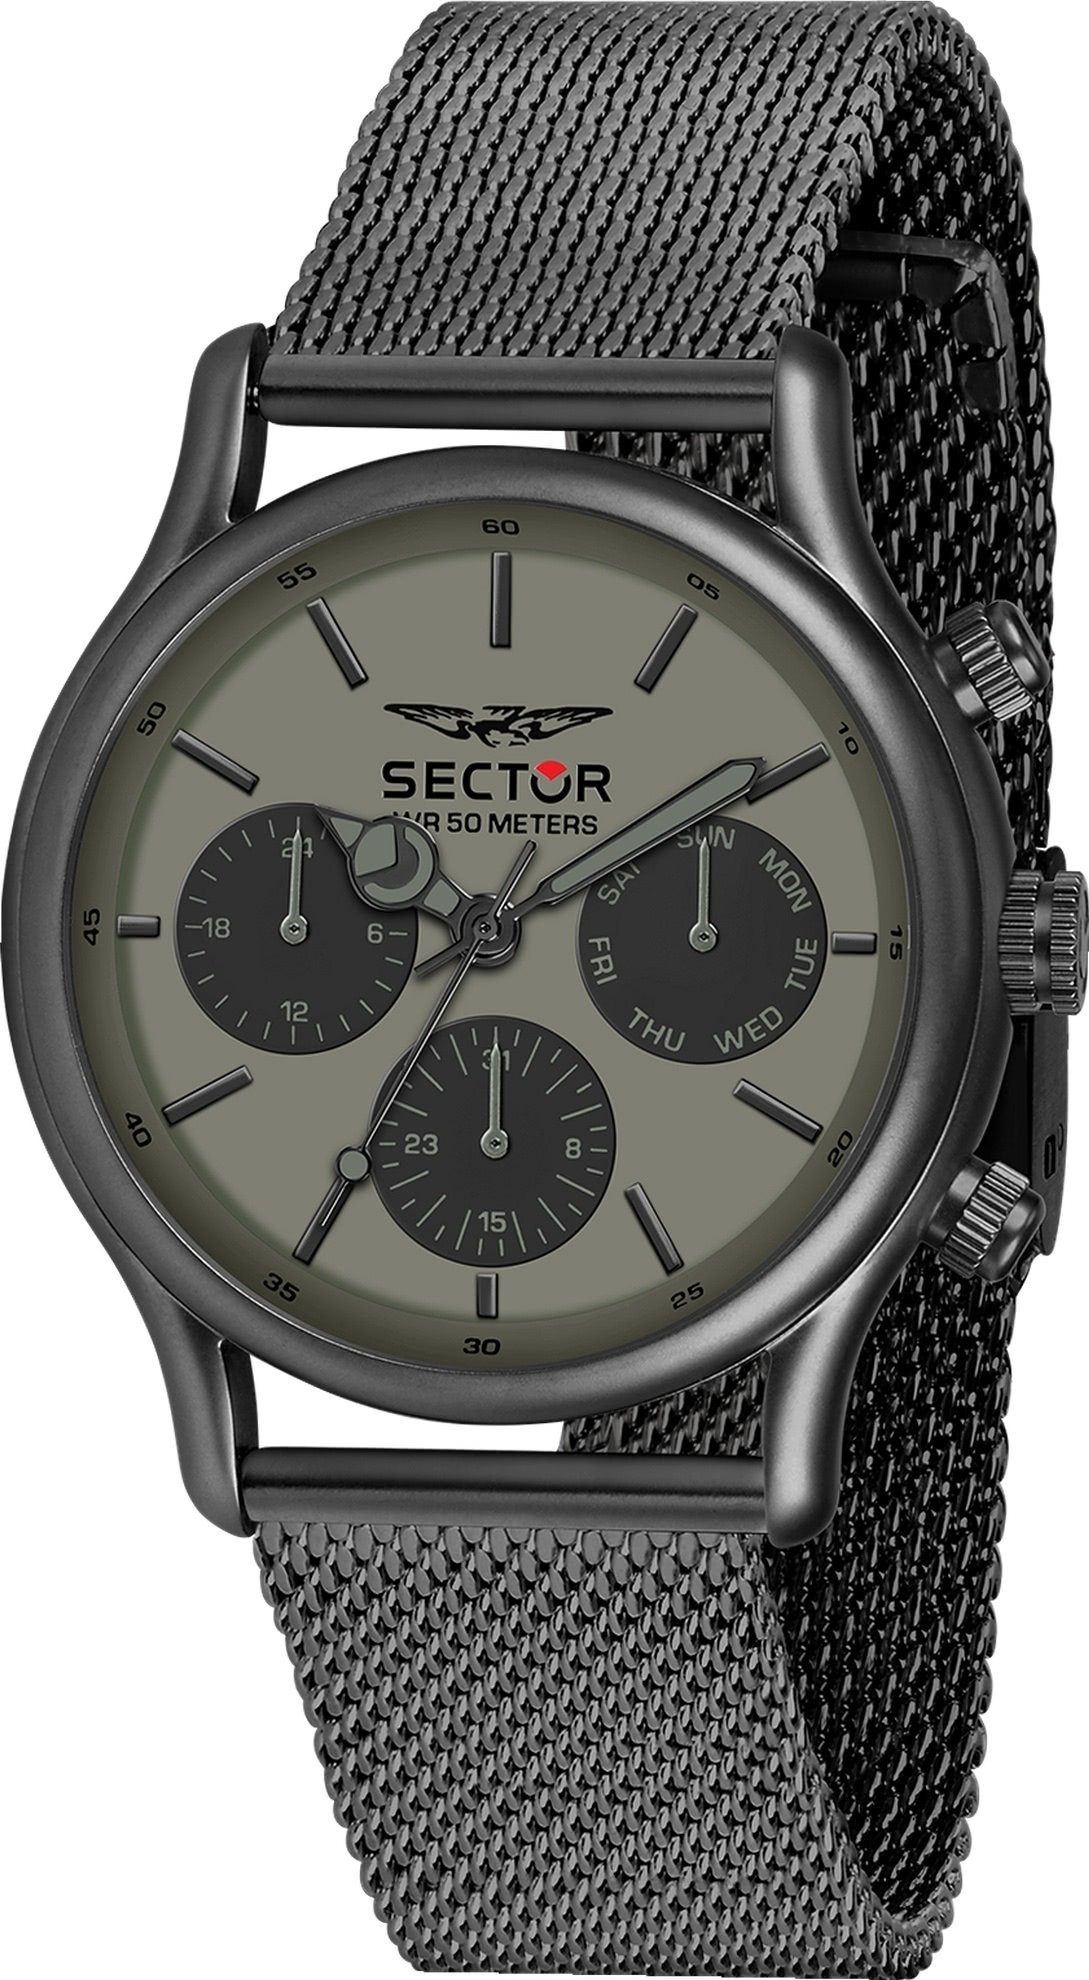 Sector 43,5x36,1mm), extra rund, groß Armbanduhr Herren Multifunktion, Edelstahlarmband Armbanduhr Multifunktionsuhr Herren (ca. Sector